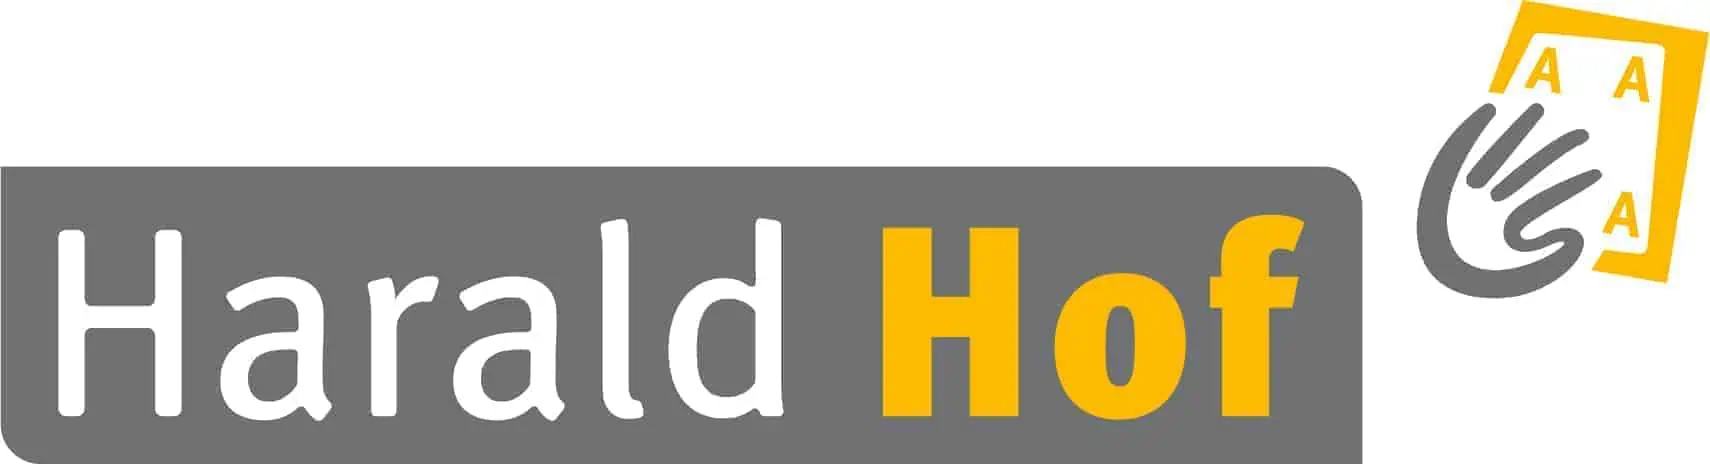 Harald Hof Logo